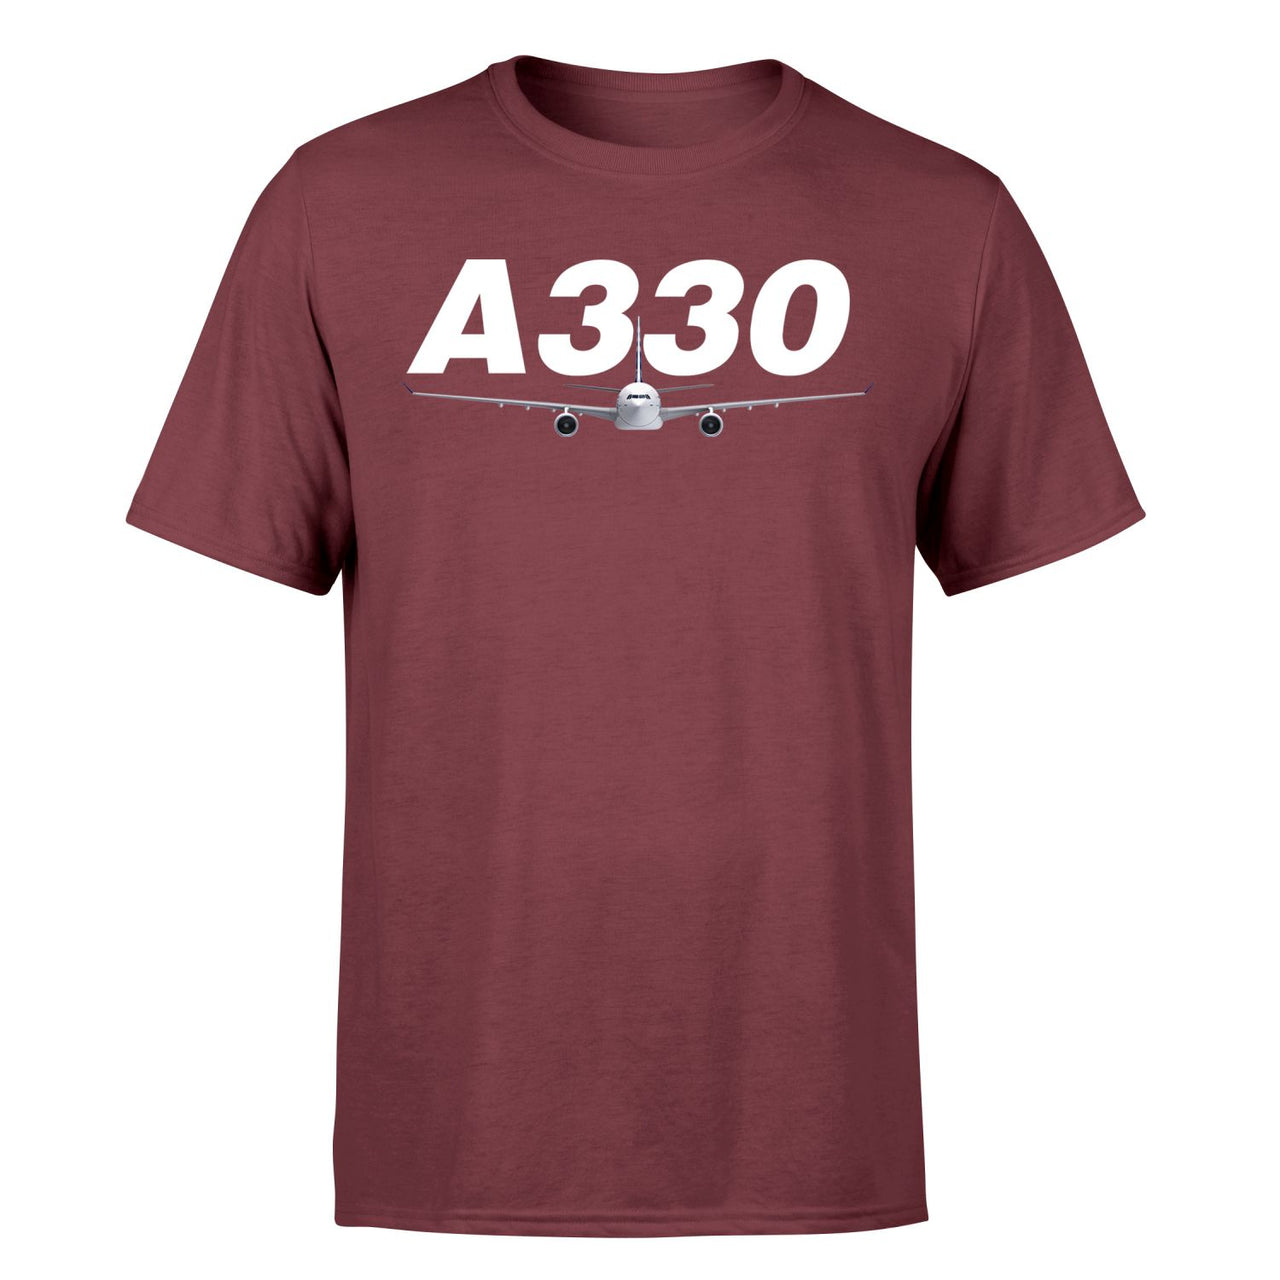 Super Airbus A330 Designed T-Shirts